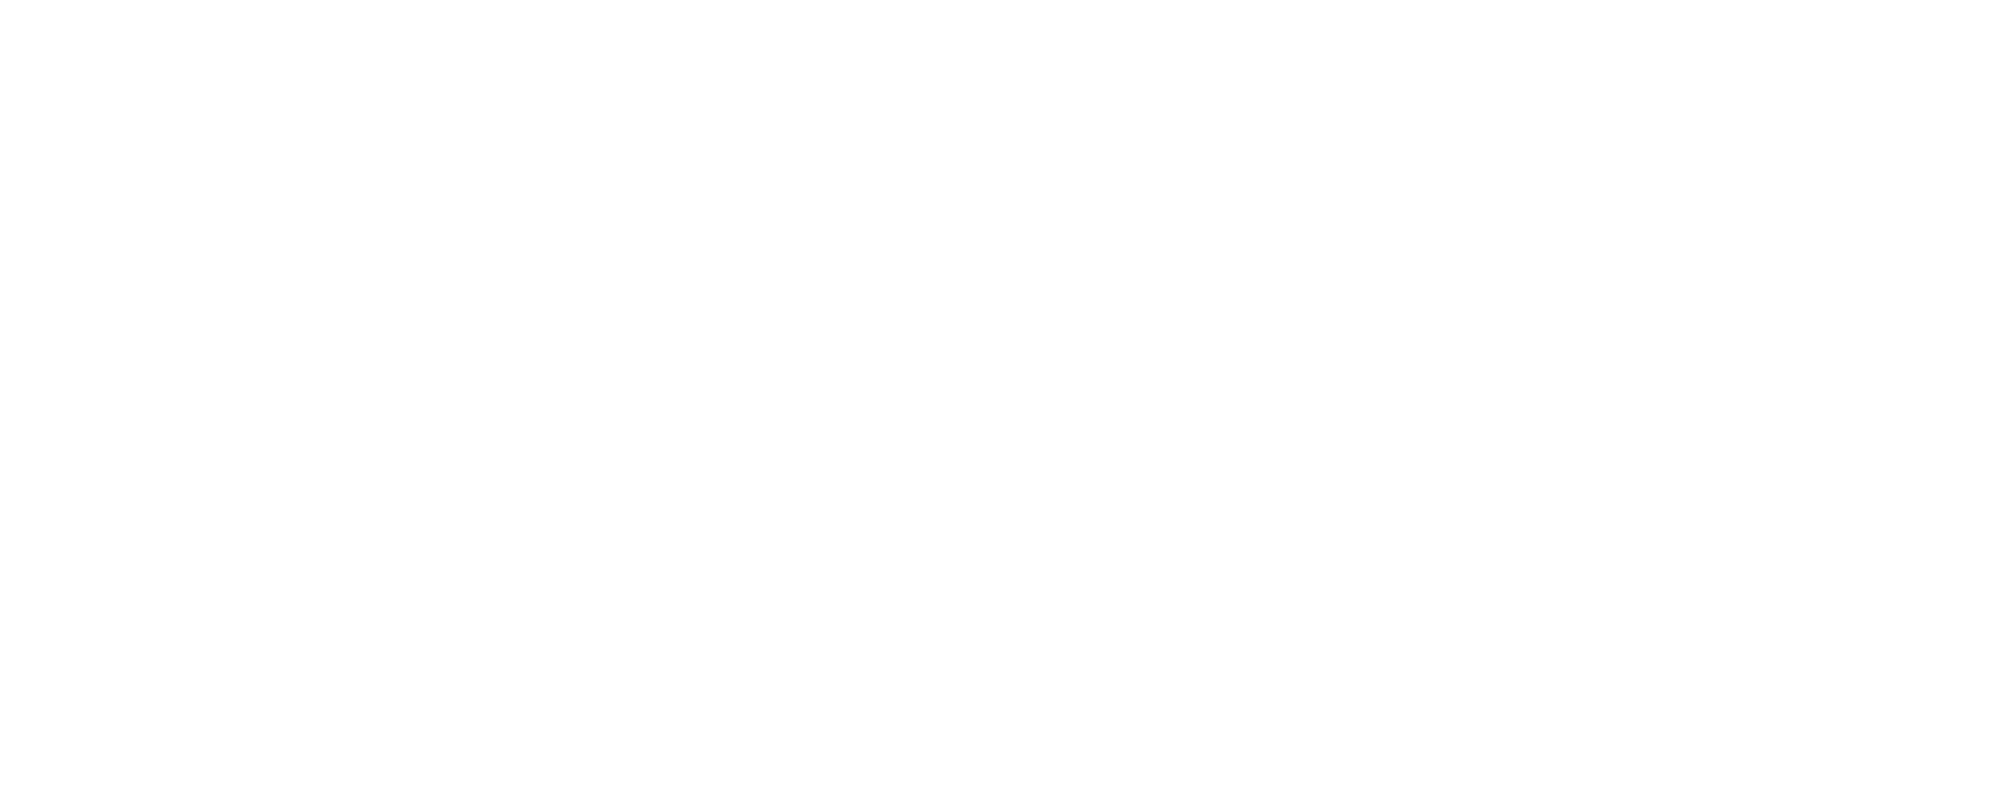 Dataseat Mobile DSP